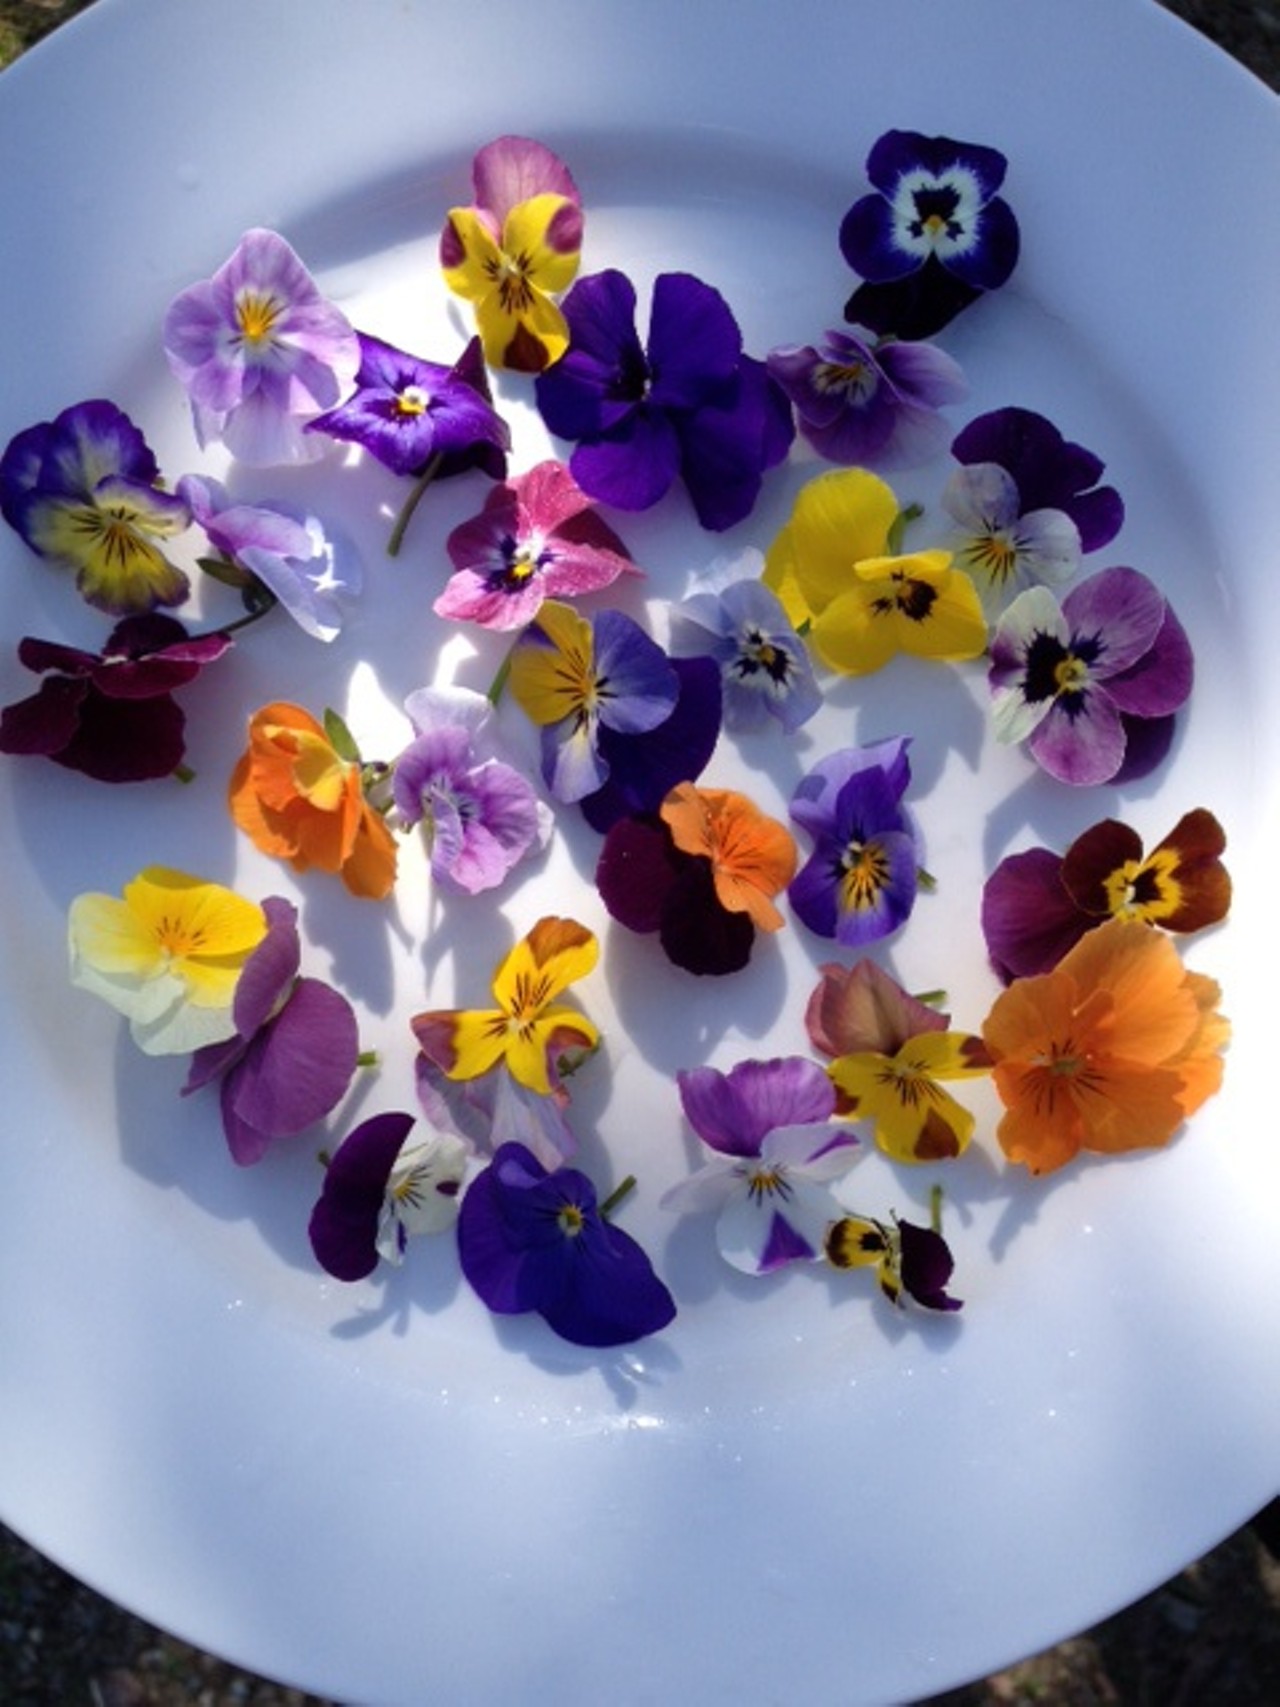 It's bloomin' time for flower power | Glenda Bartosh on Food | Pique ...